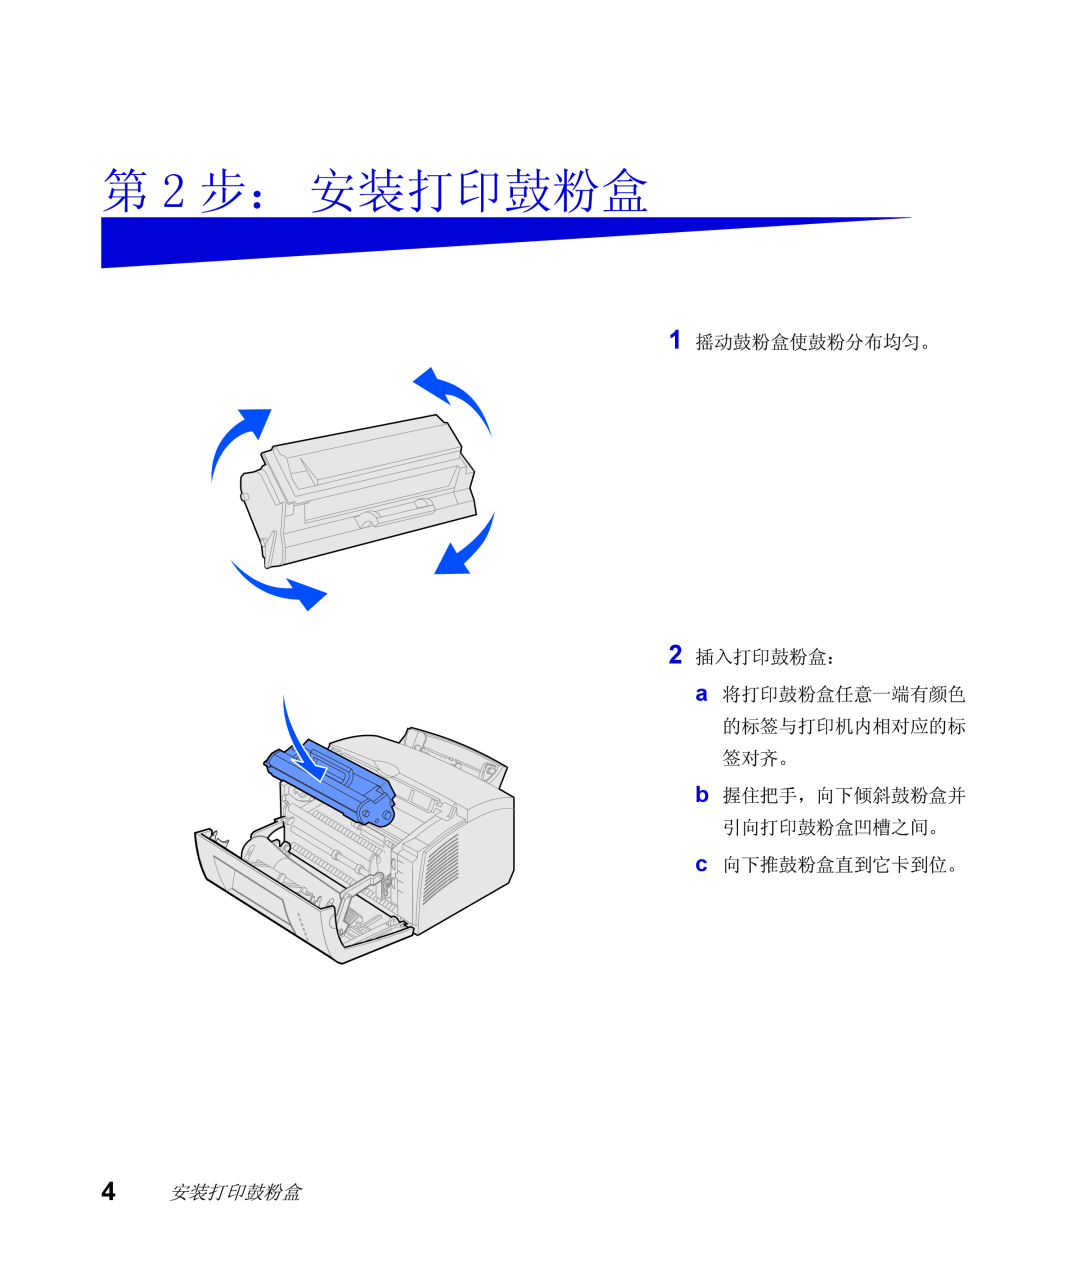 Lexmark Infoprint 1116 setup guide 第 2 步： 安装打印鼓粉盒, 1 摇动鼓粉盒使鼓粉分布均匀。 2 插入打印鼓粉盒： a 将打印鼓粉盒任意一端有颜色 的标签与打印机内相对应的标 签对齐。, 4 安装打印鼓粉盒 